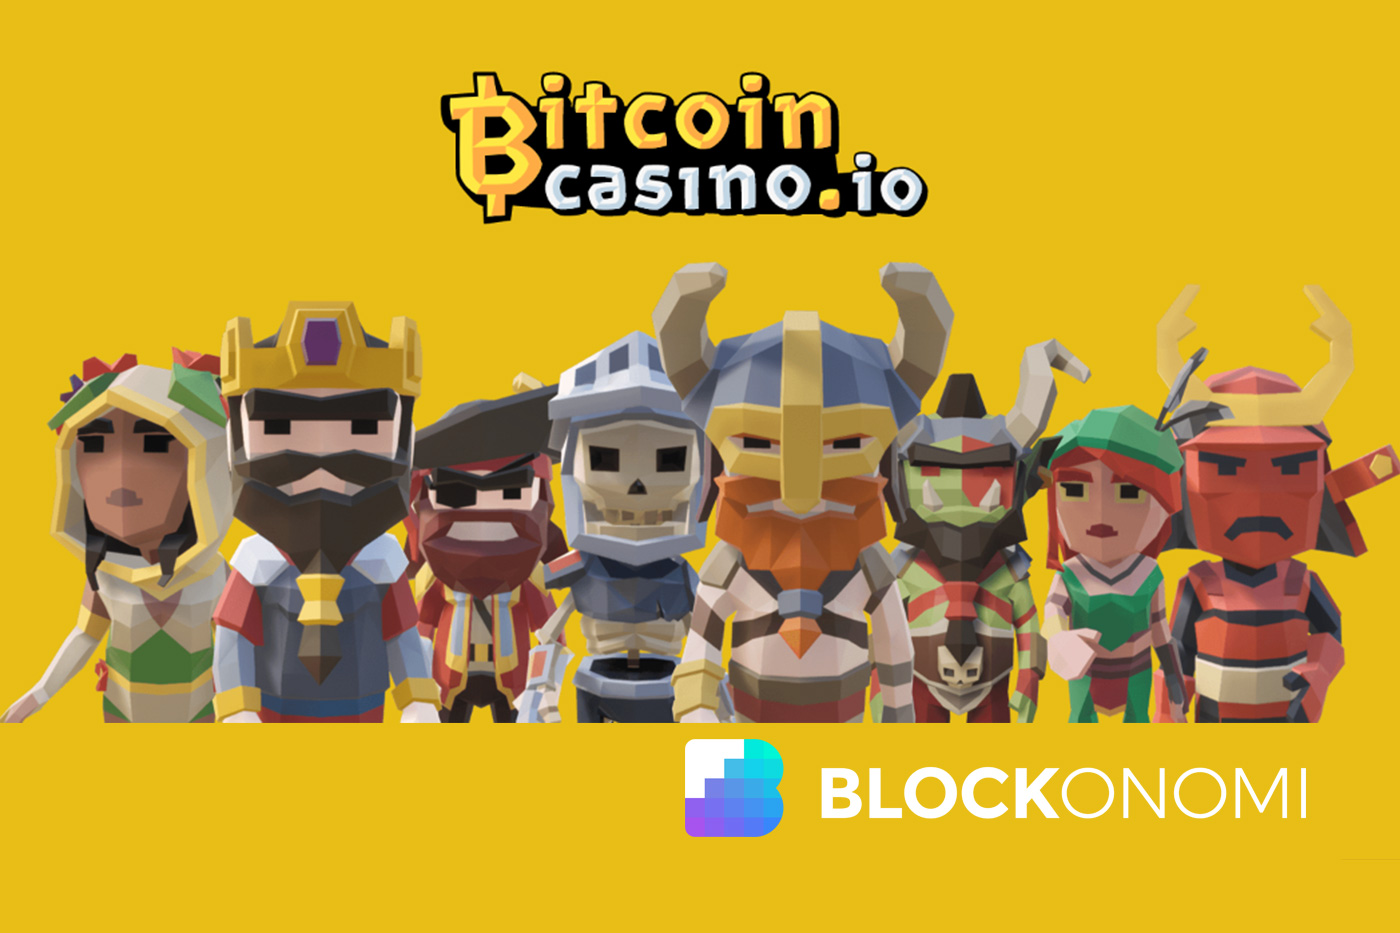 Bitcoin casino portimao